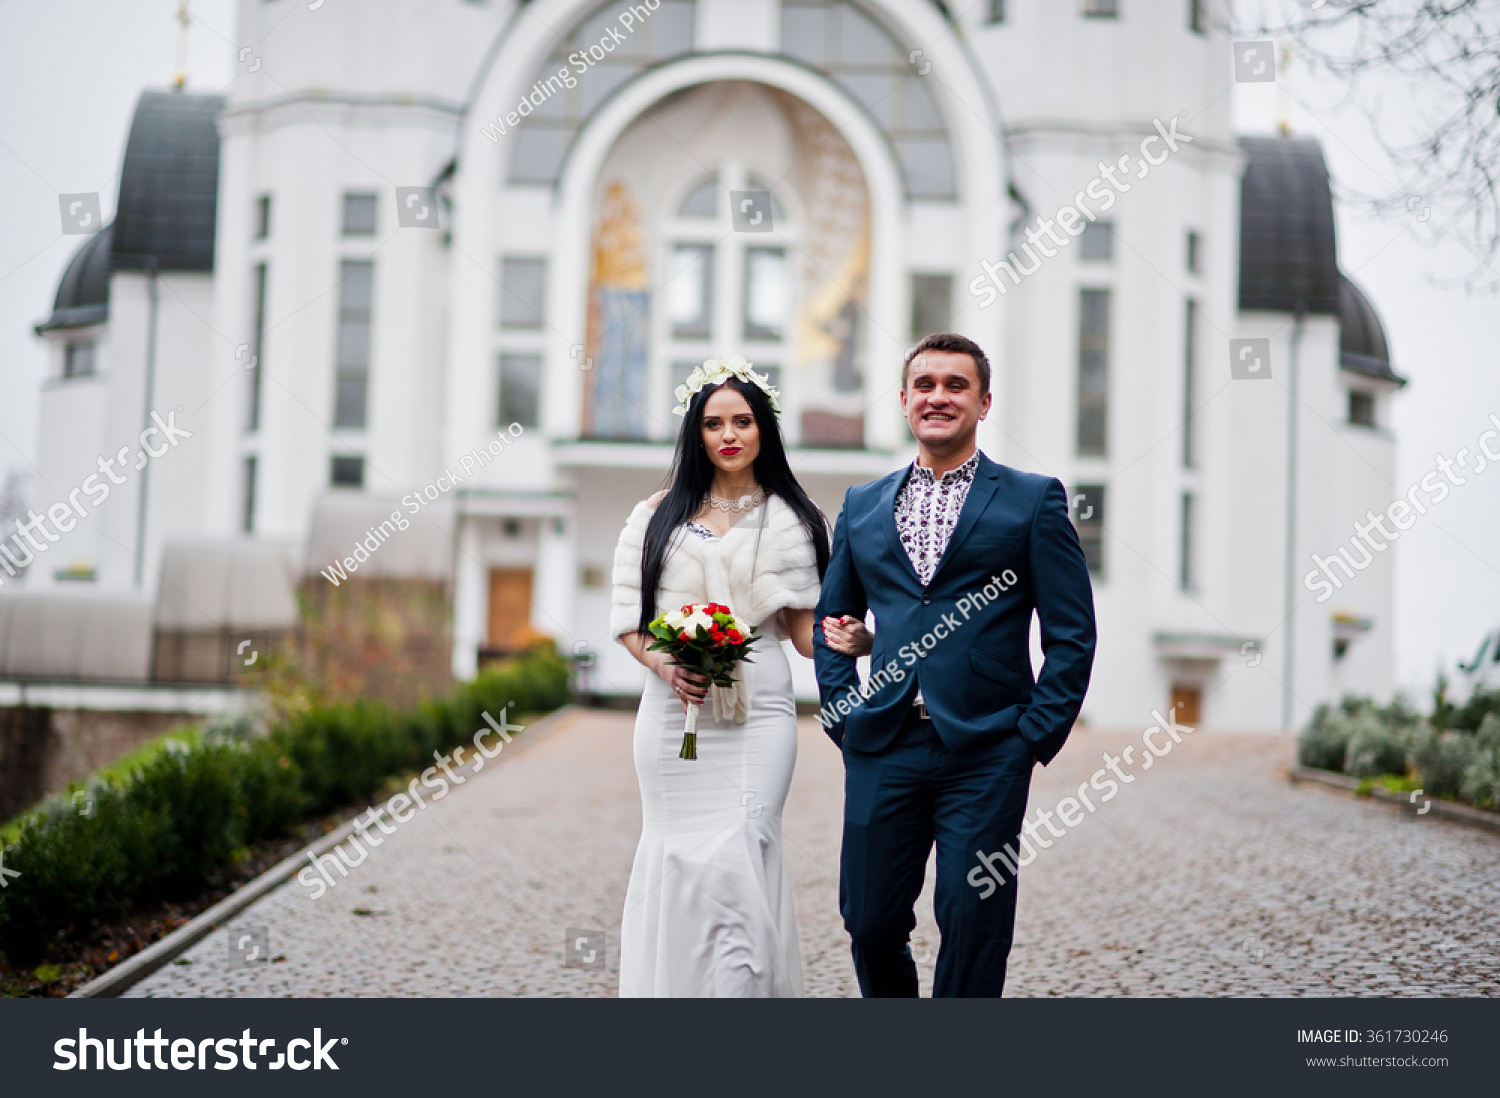 wedding church background